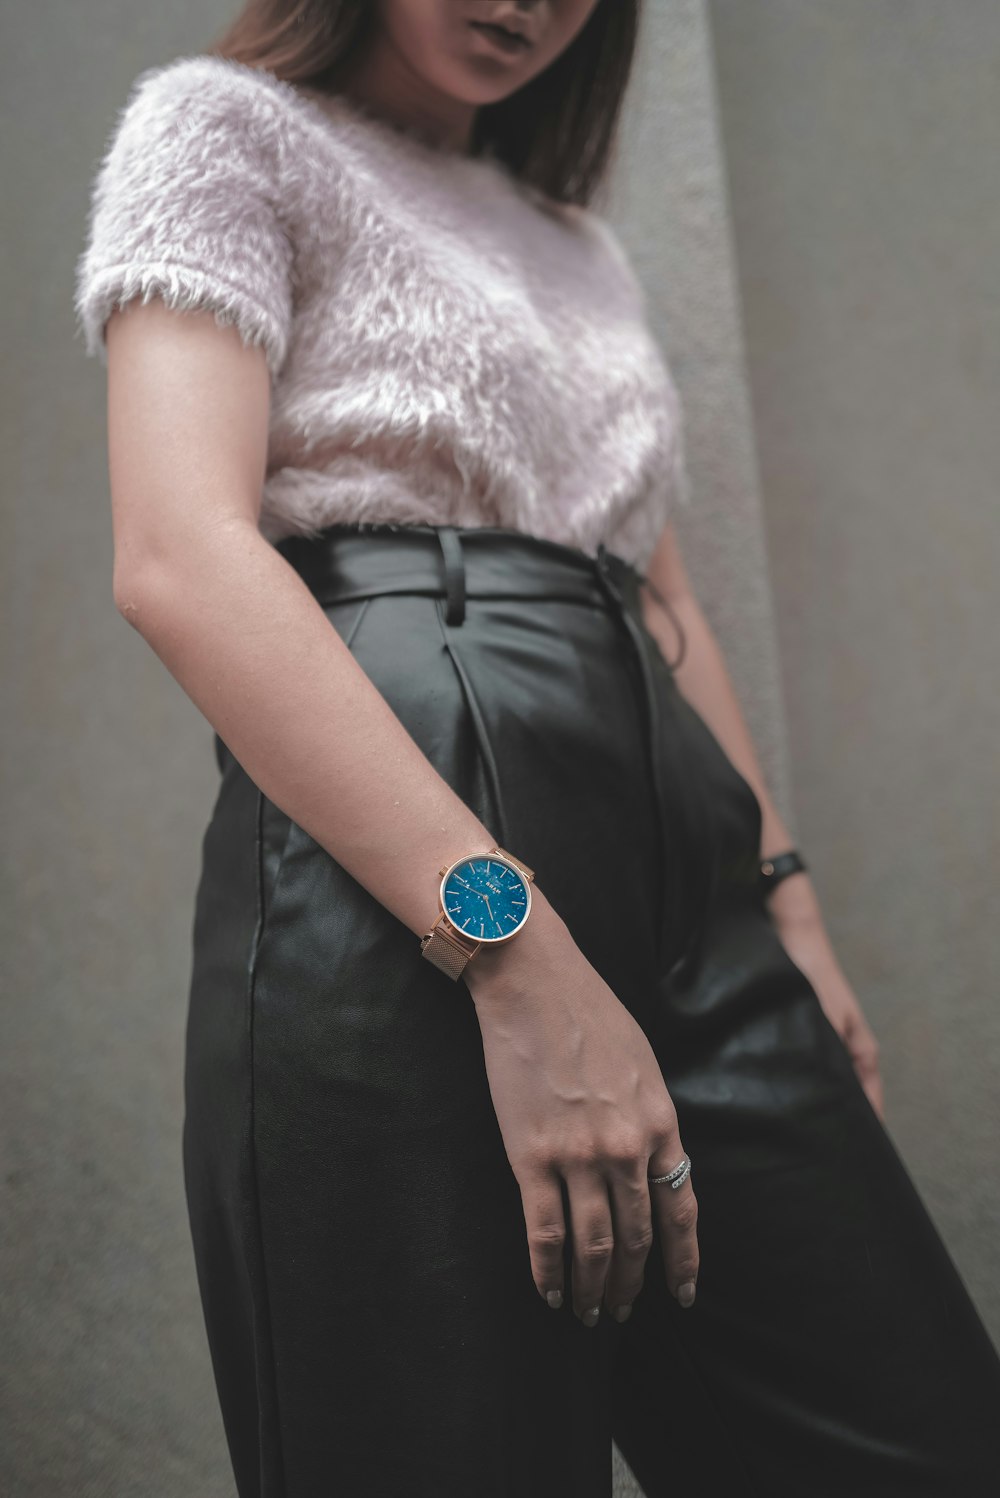 woman in white fur coat wearing blue analog watch